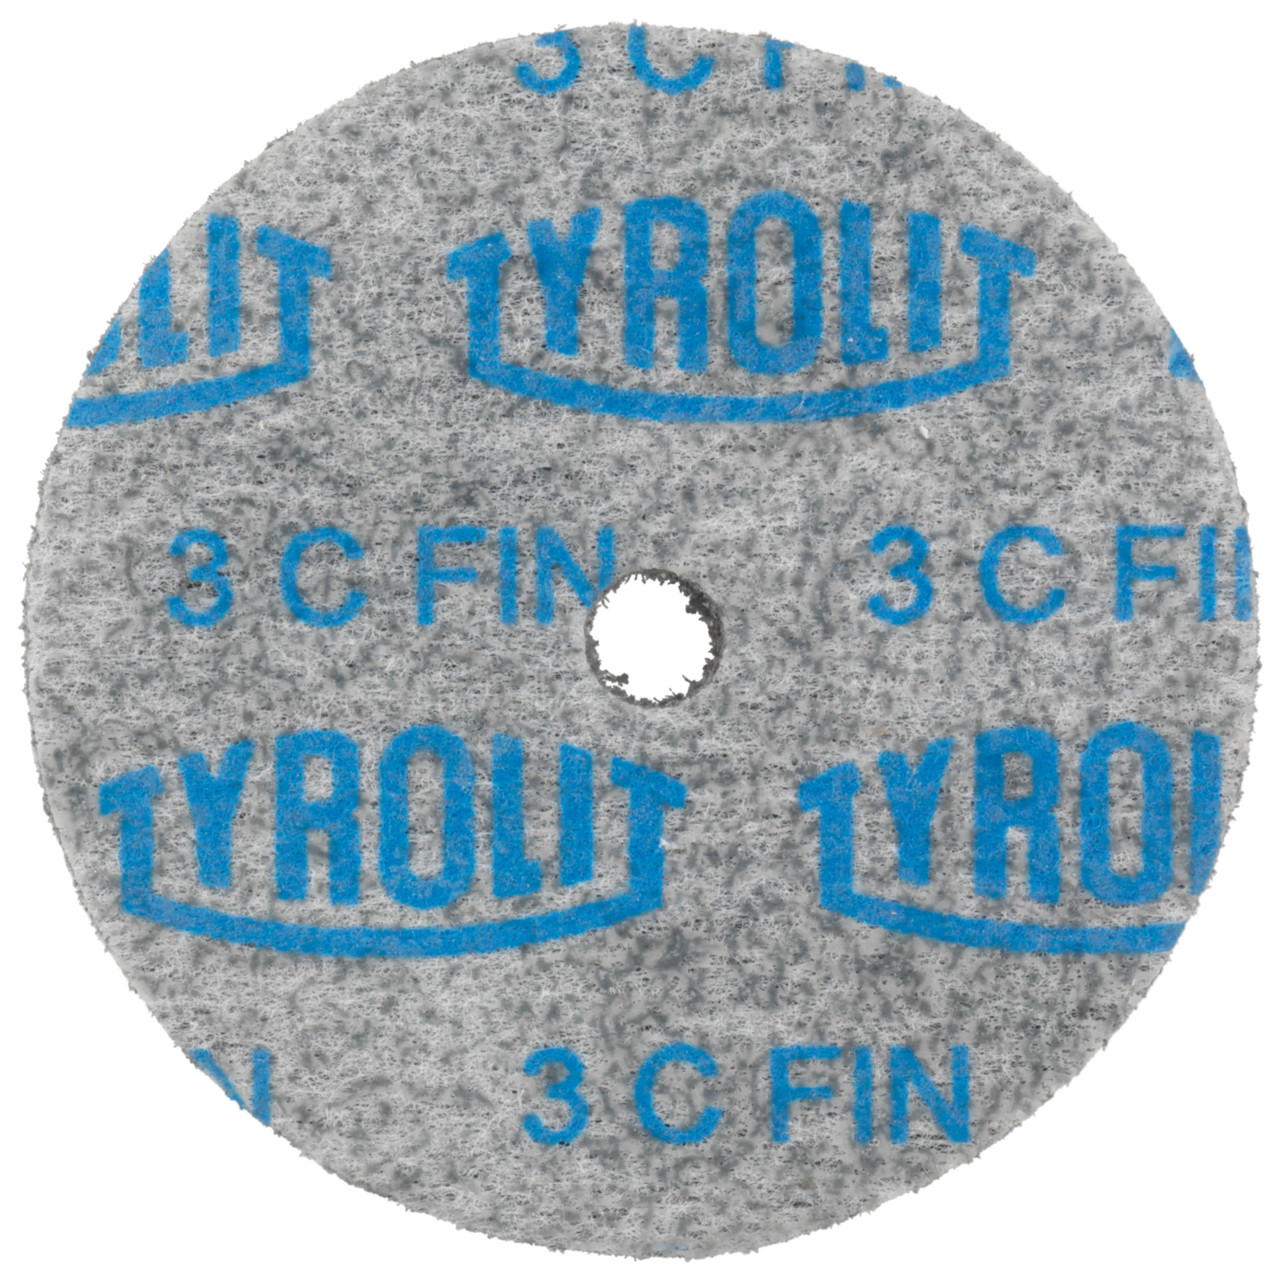 Tyrolit Discos compactos prensados DxDxH 25x25x4,8 Inserto universal, 2 C FEIN, forma: 1, Art. 34201994